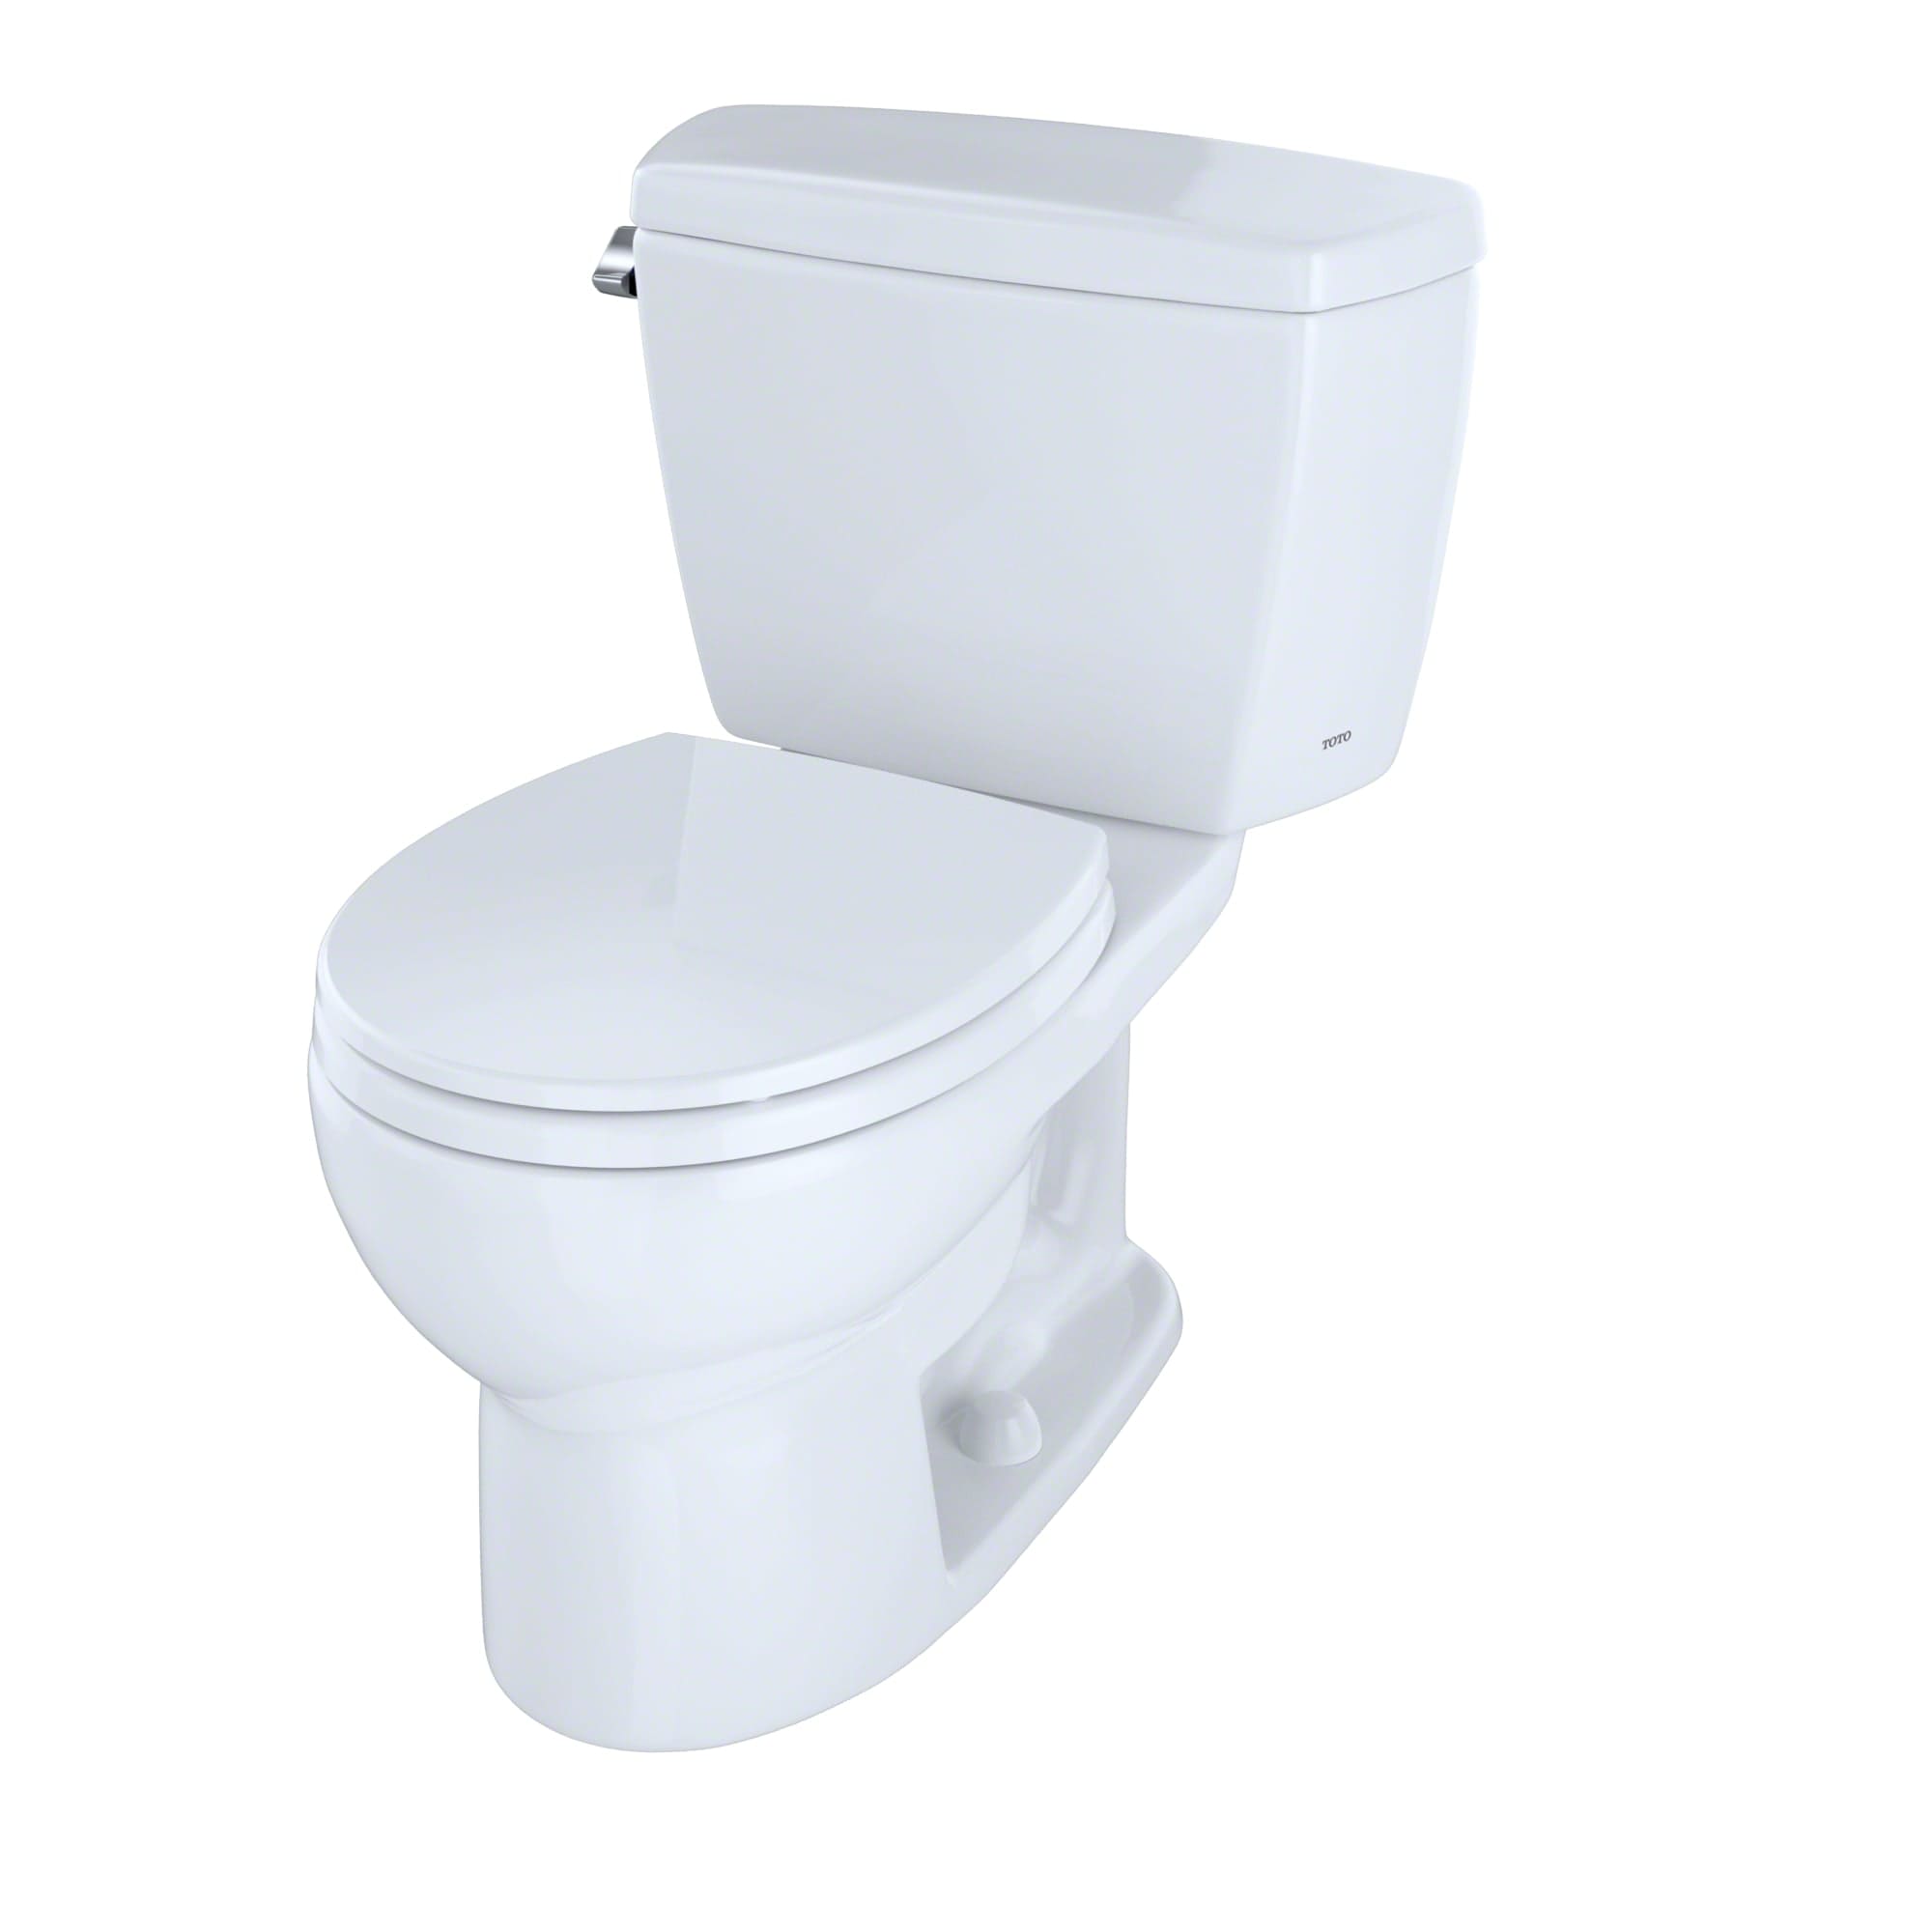 Cotton Tank TOTO GPF Drake Toilet 1.6 ST743S01 for sale online 